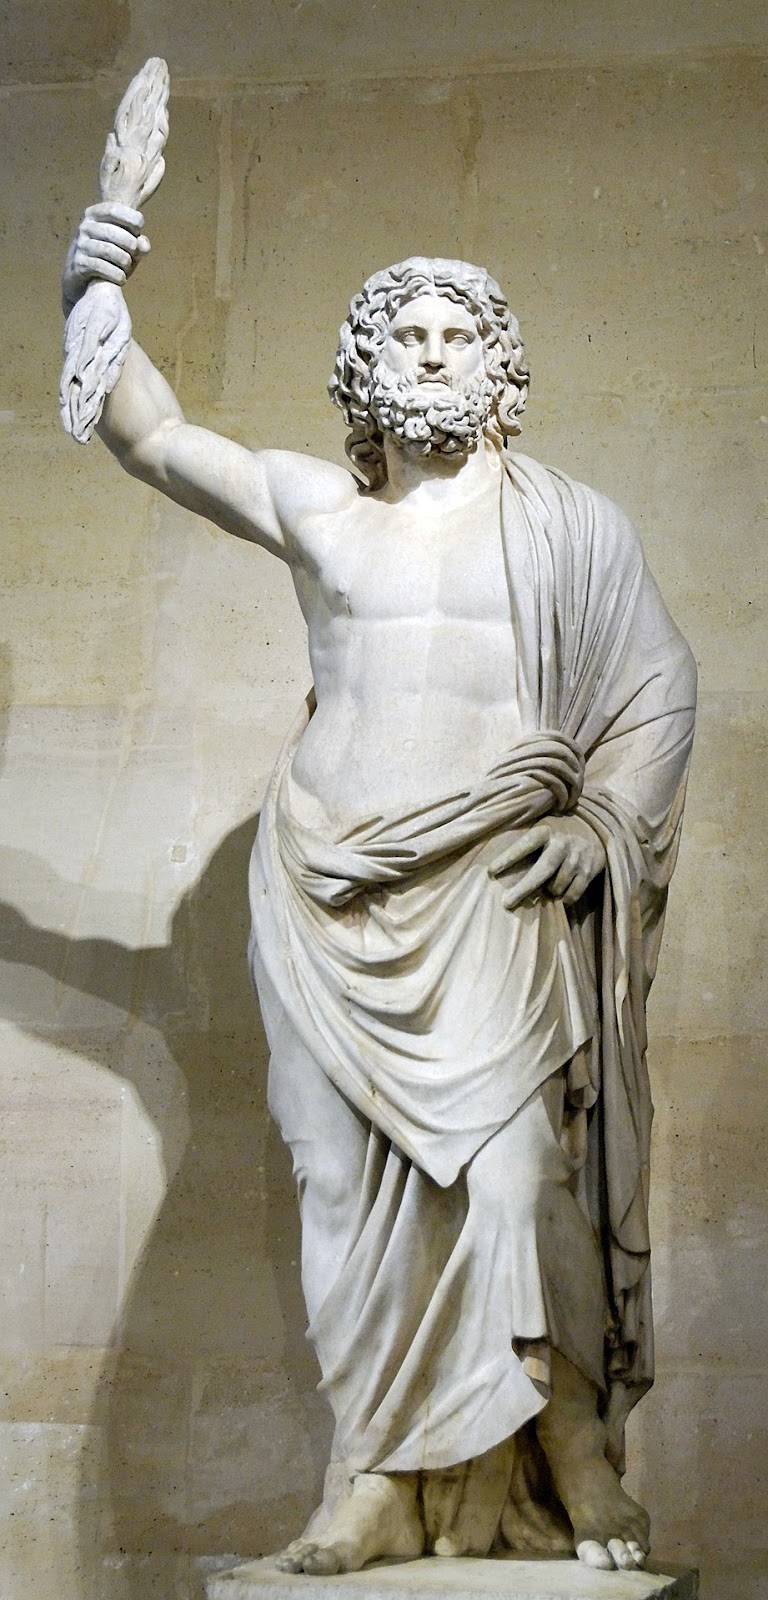 Zeus holding a thunderbolt. Zeus de Smyrne, discovered in Smyrna in 1680